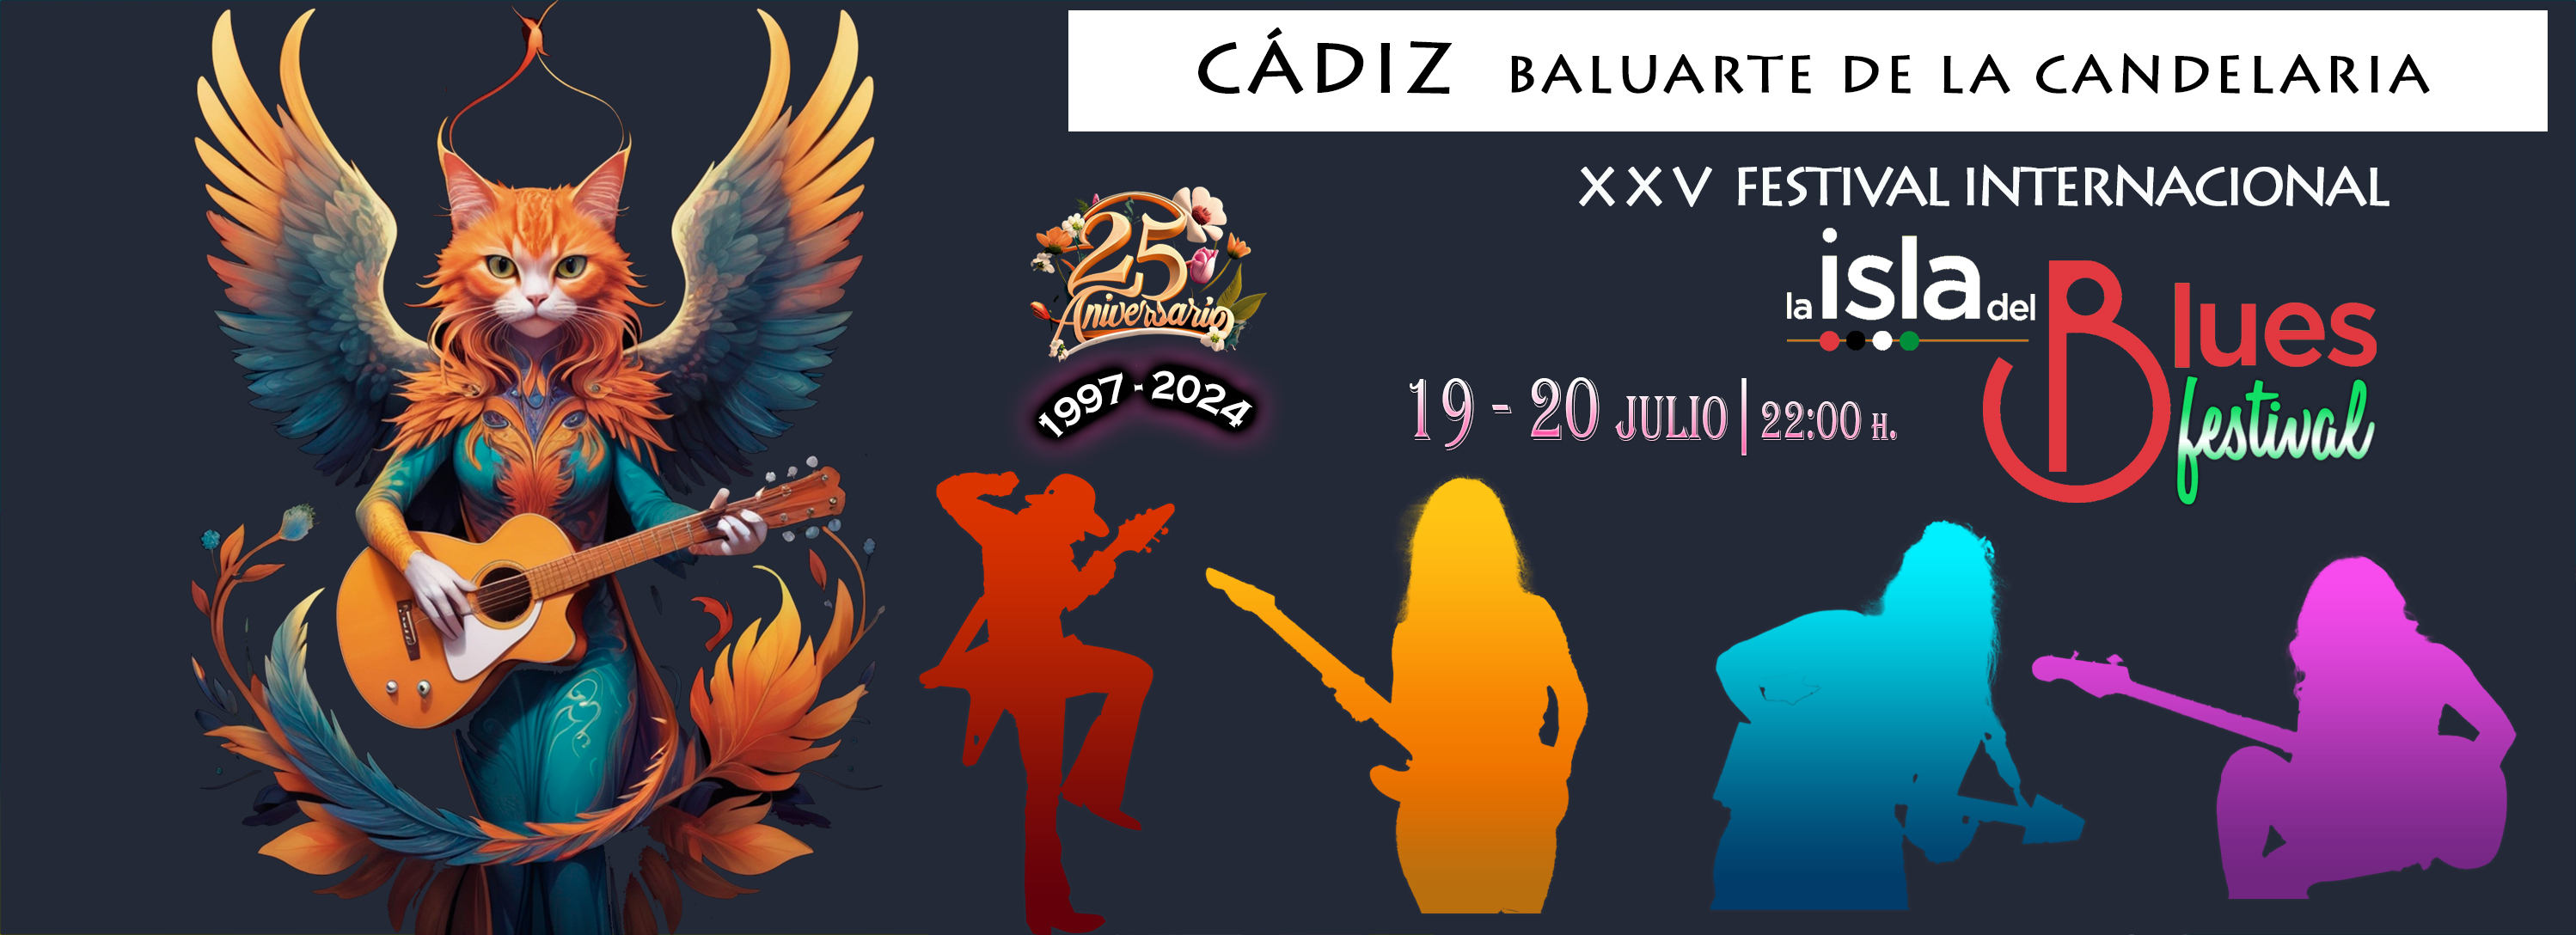 XXV Festival Isla del Blues en Baluarte de Candelaria - Cádiz - Mutick